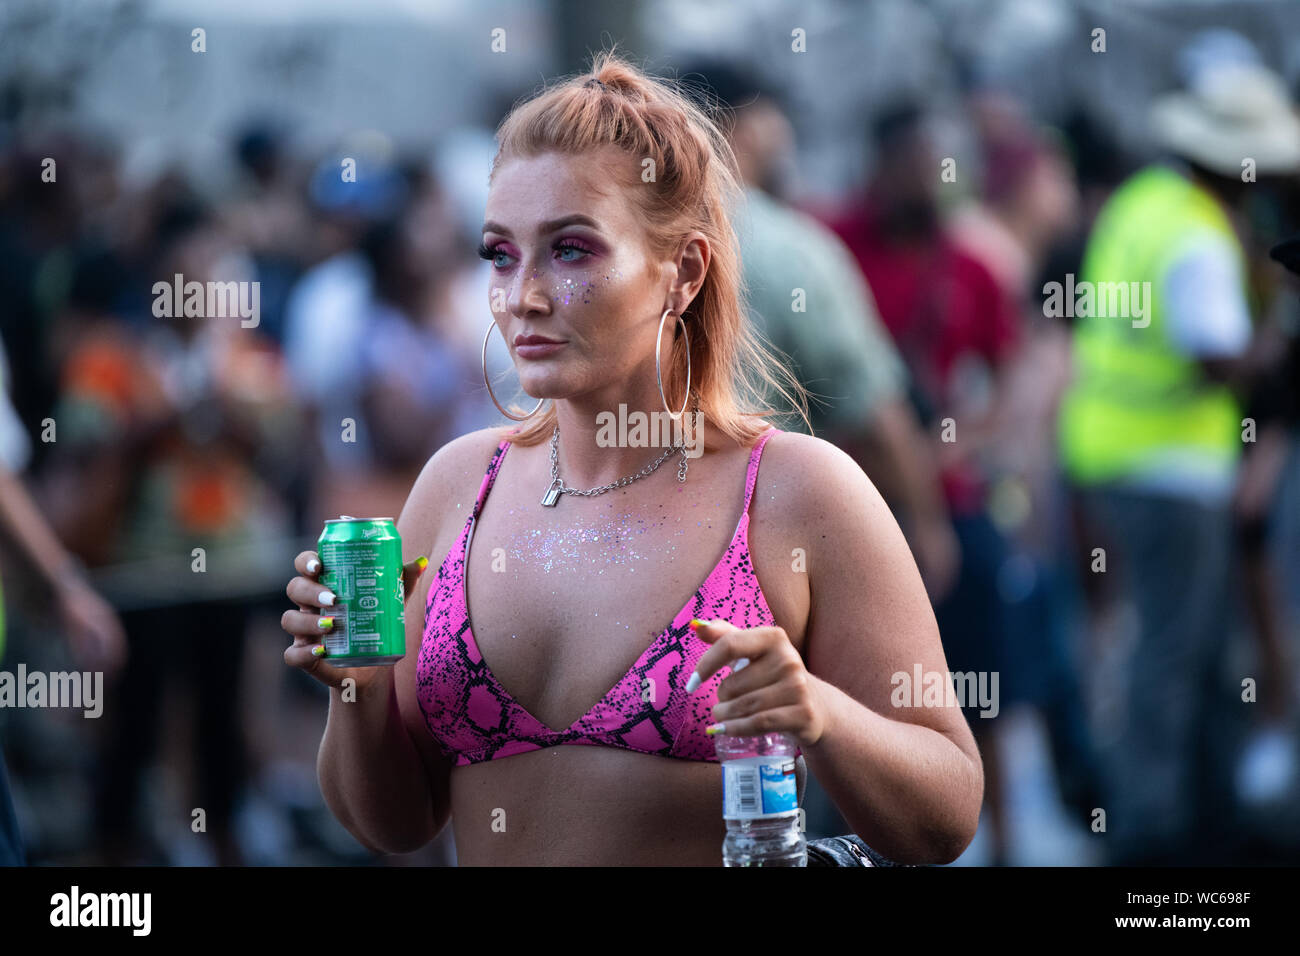 Girl wearing pink bra to examine their breasts. Stock Photo by ©poznyakov  89668104